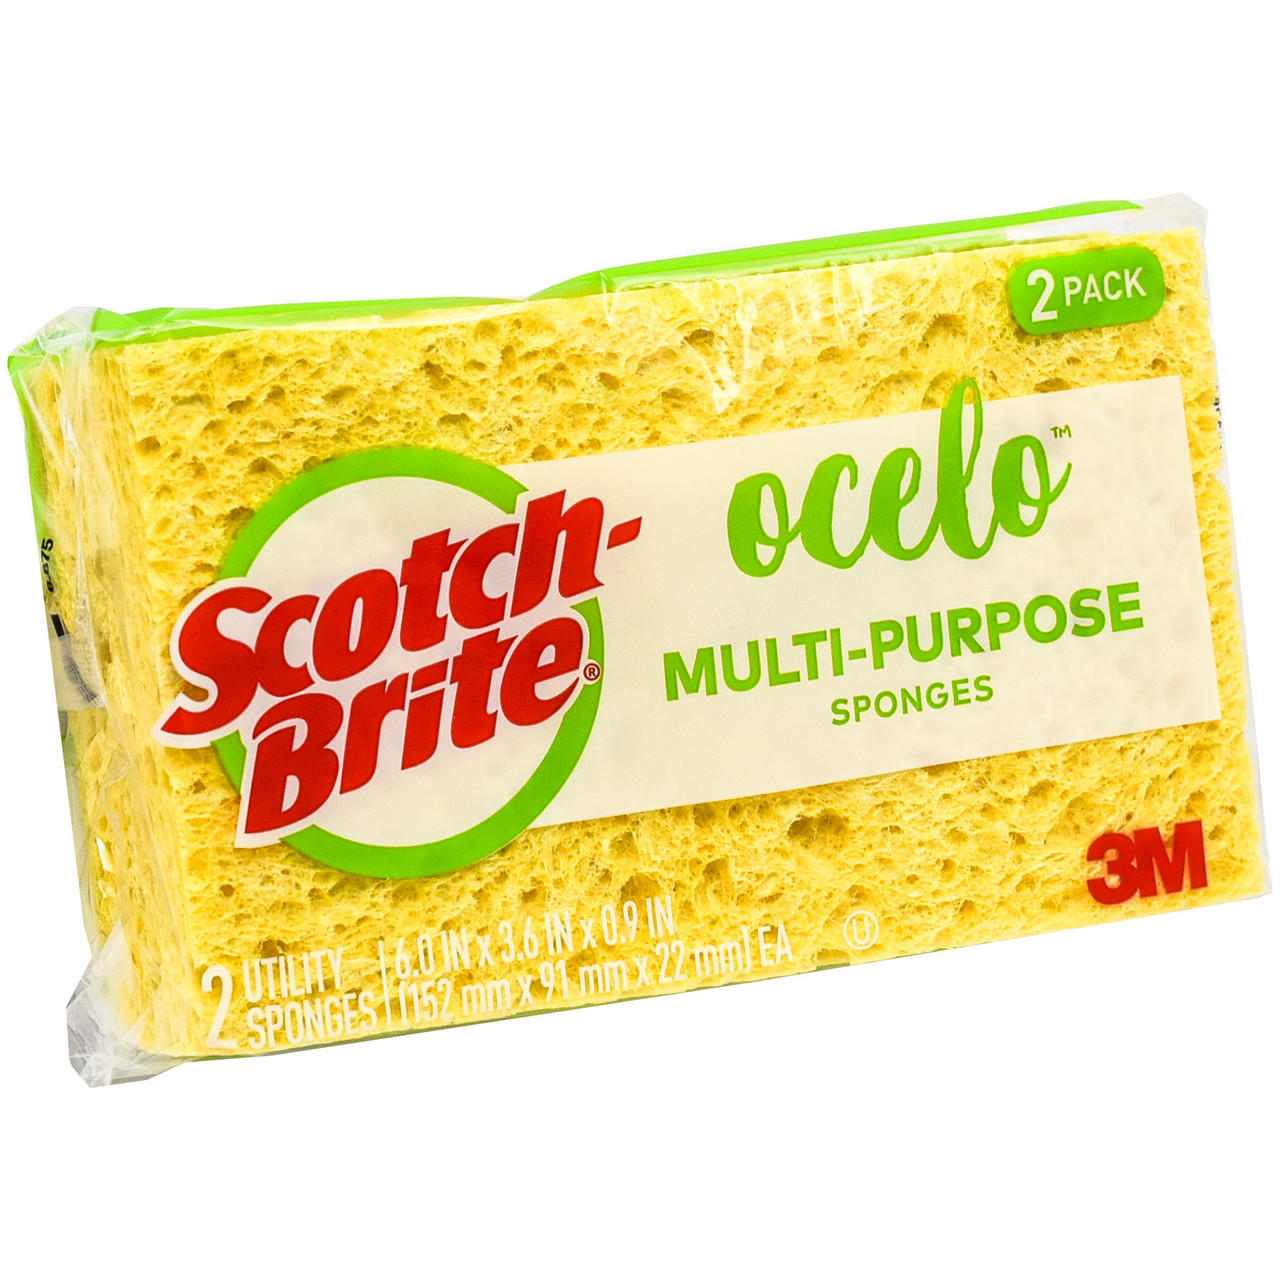 Scotch-Brite O-celo Multi-Purpose Utility Sponges